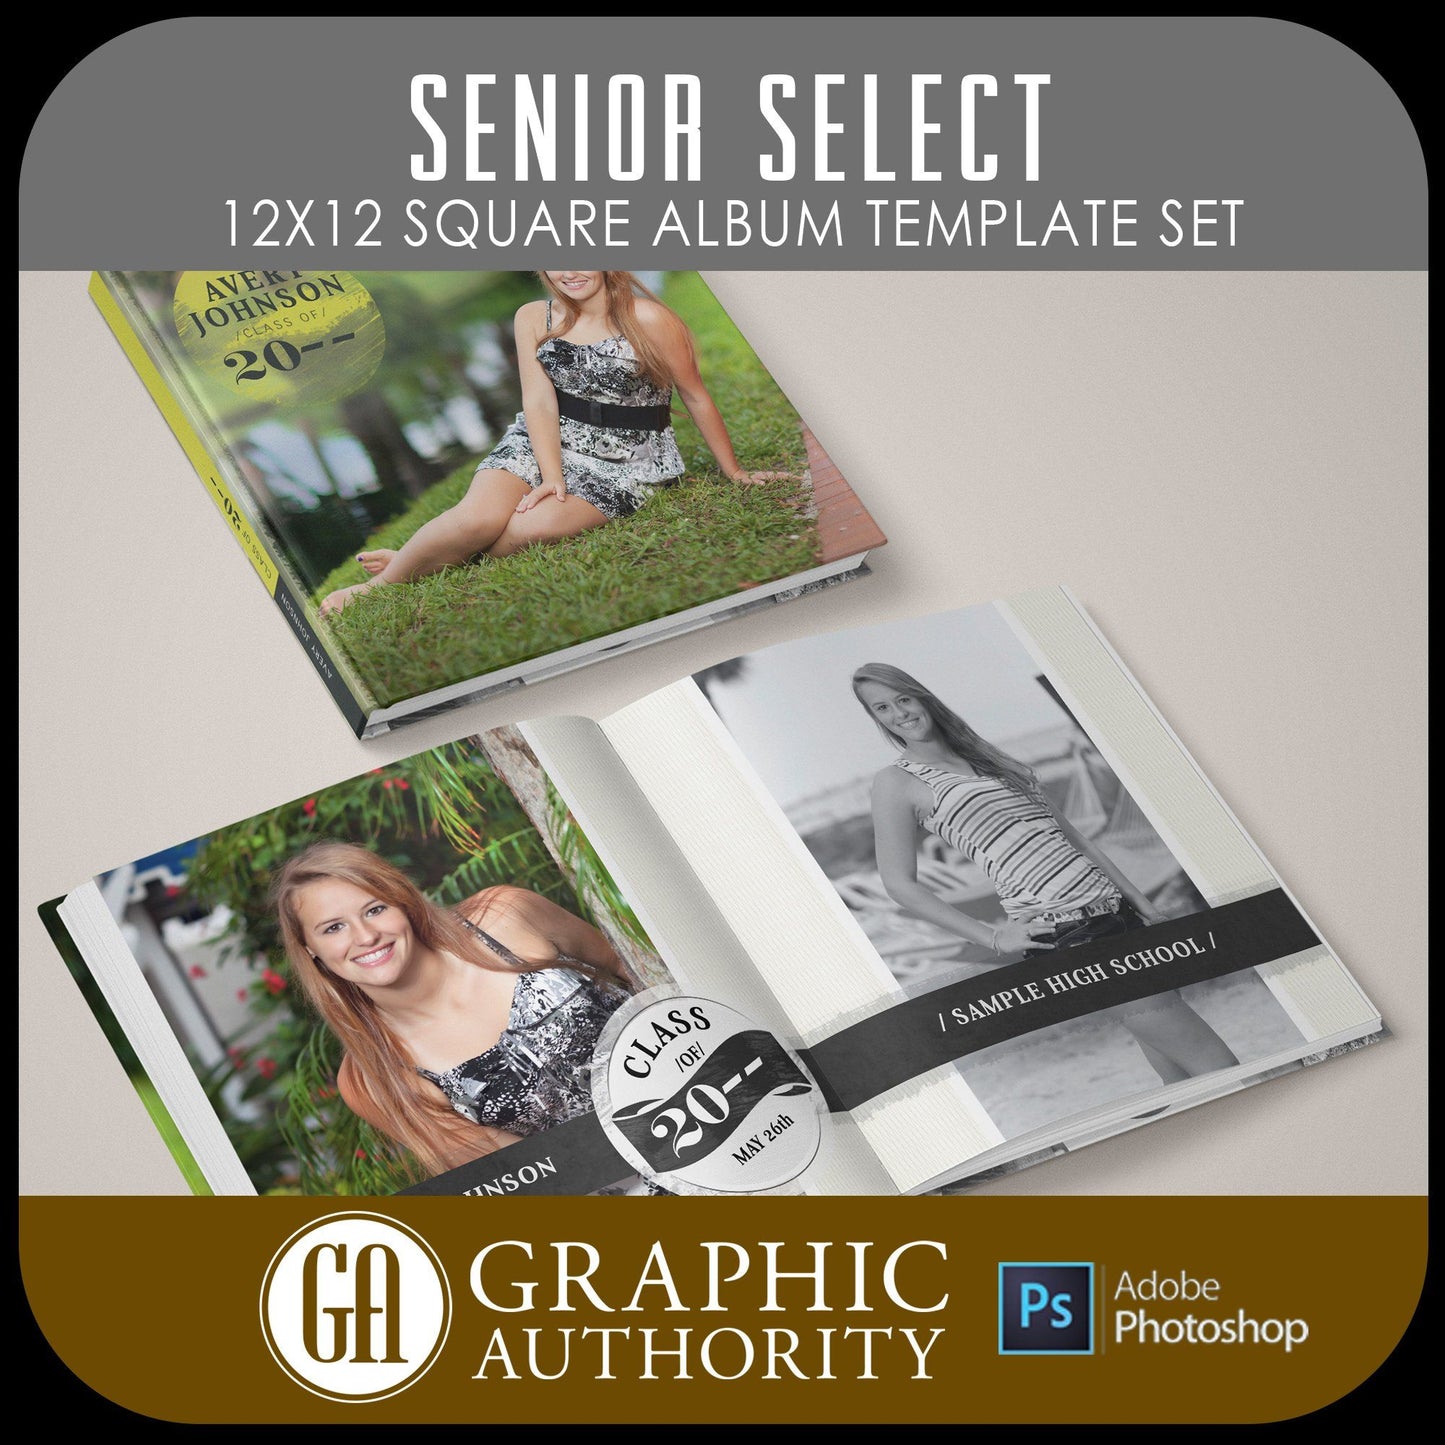 Senior Select - 12x24 - Album Spreads-Photoshop Template - Graphic Authority